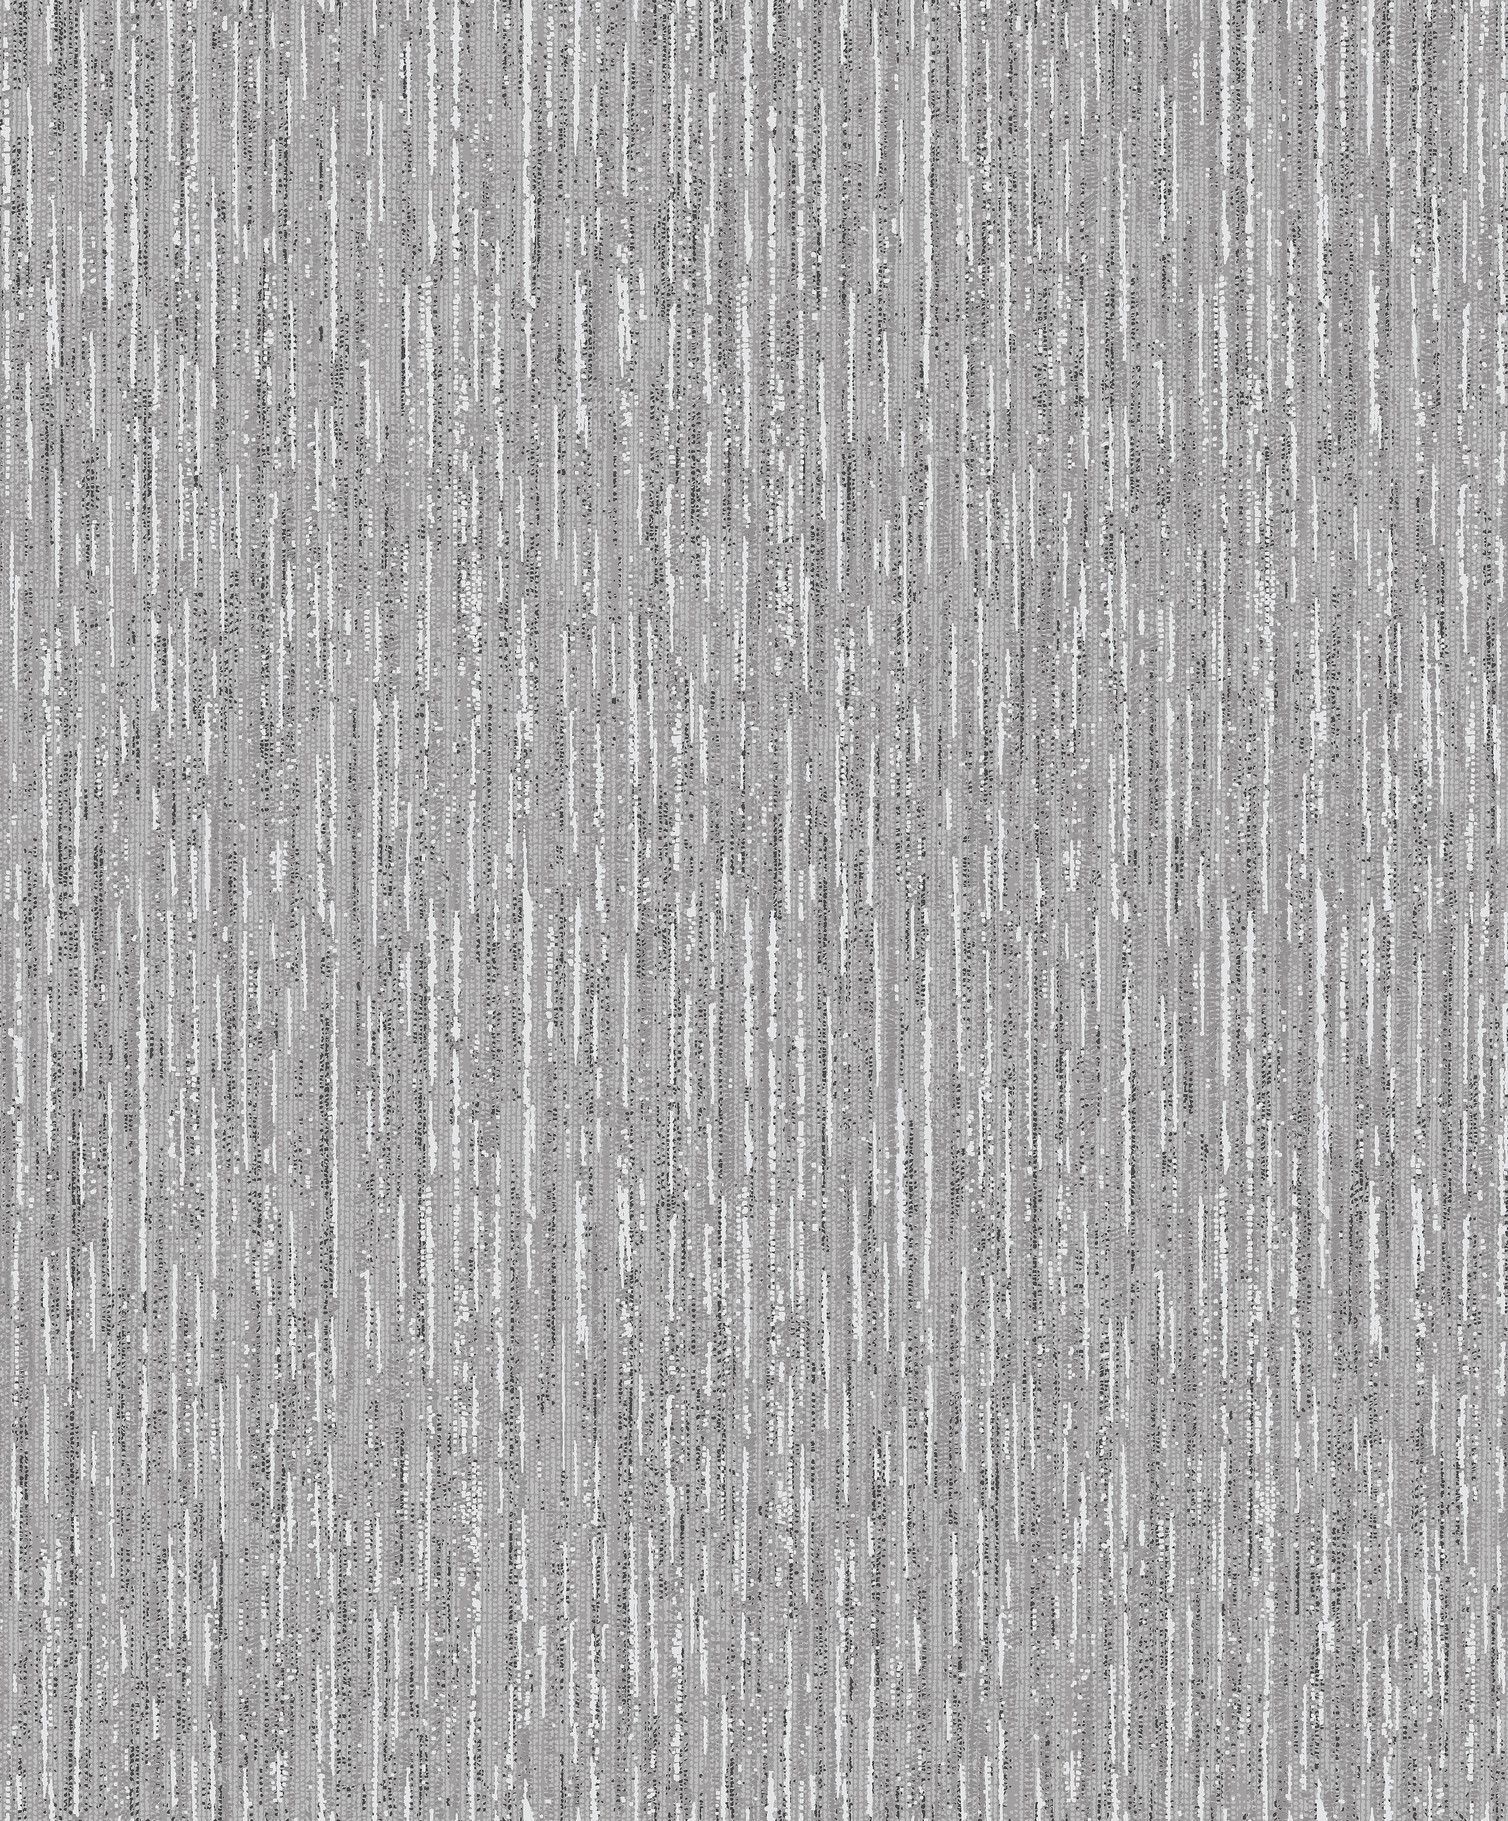 Silver Gray Textured Wallpaper